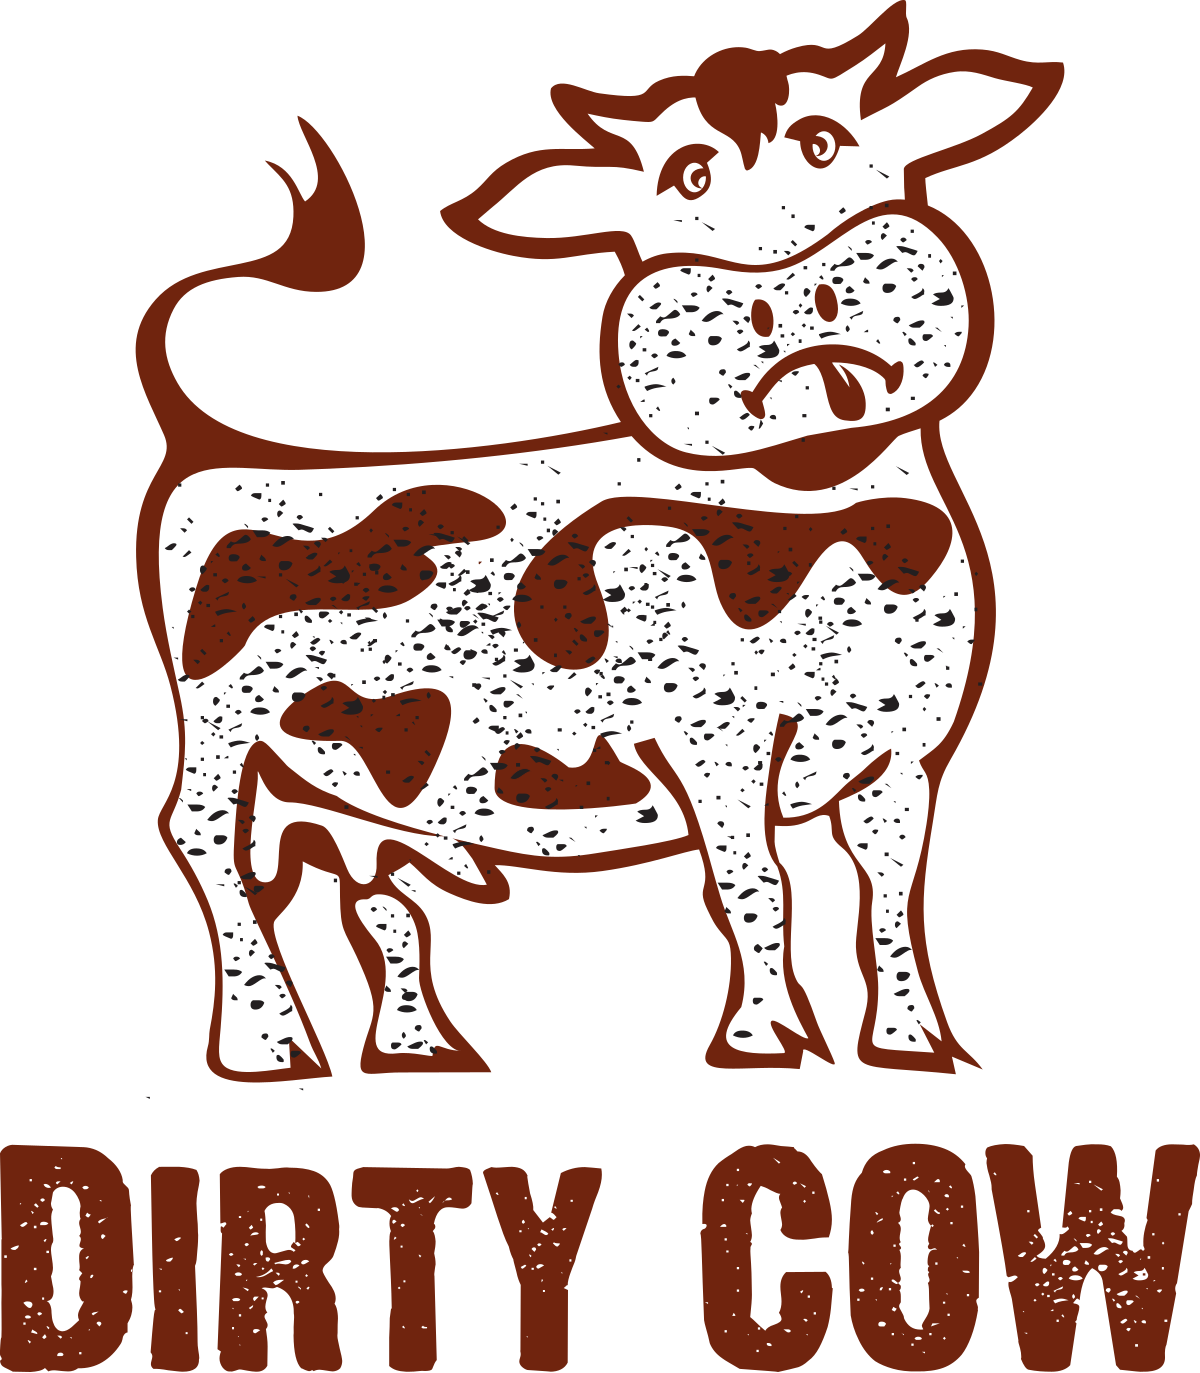 Dirty cow wikipedia . Clipart goat nilgiri tahr